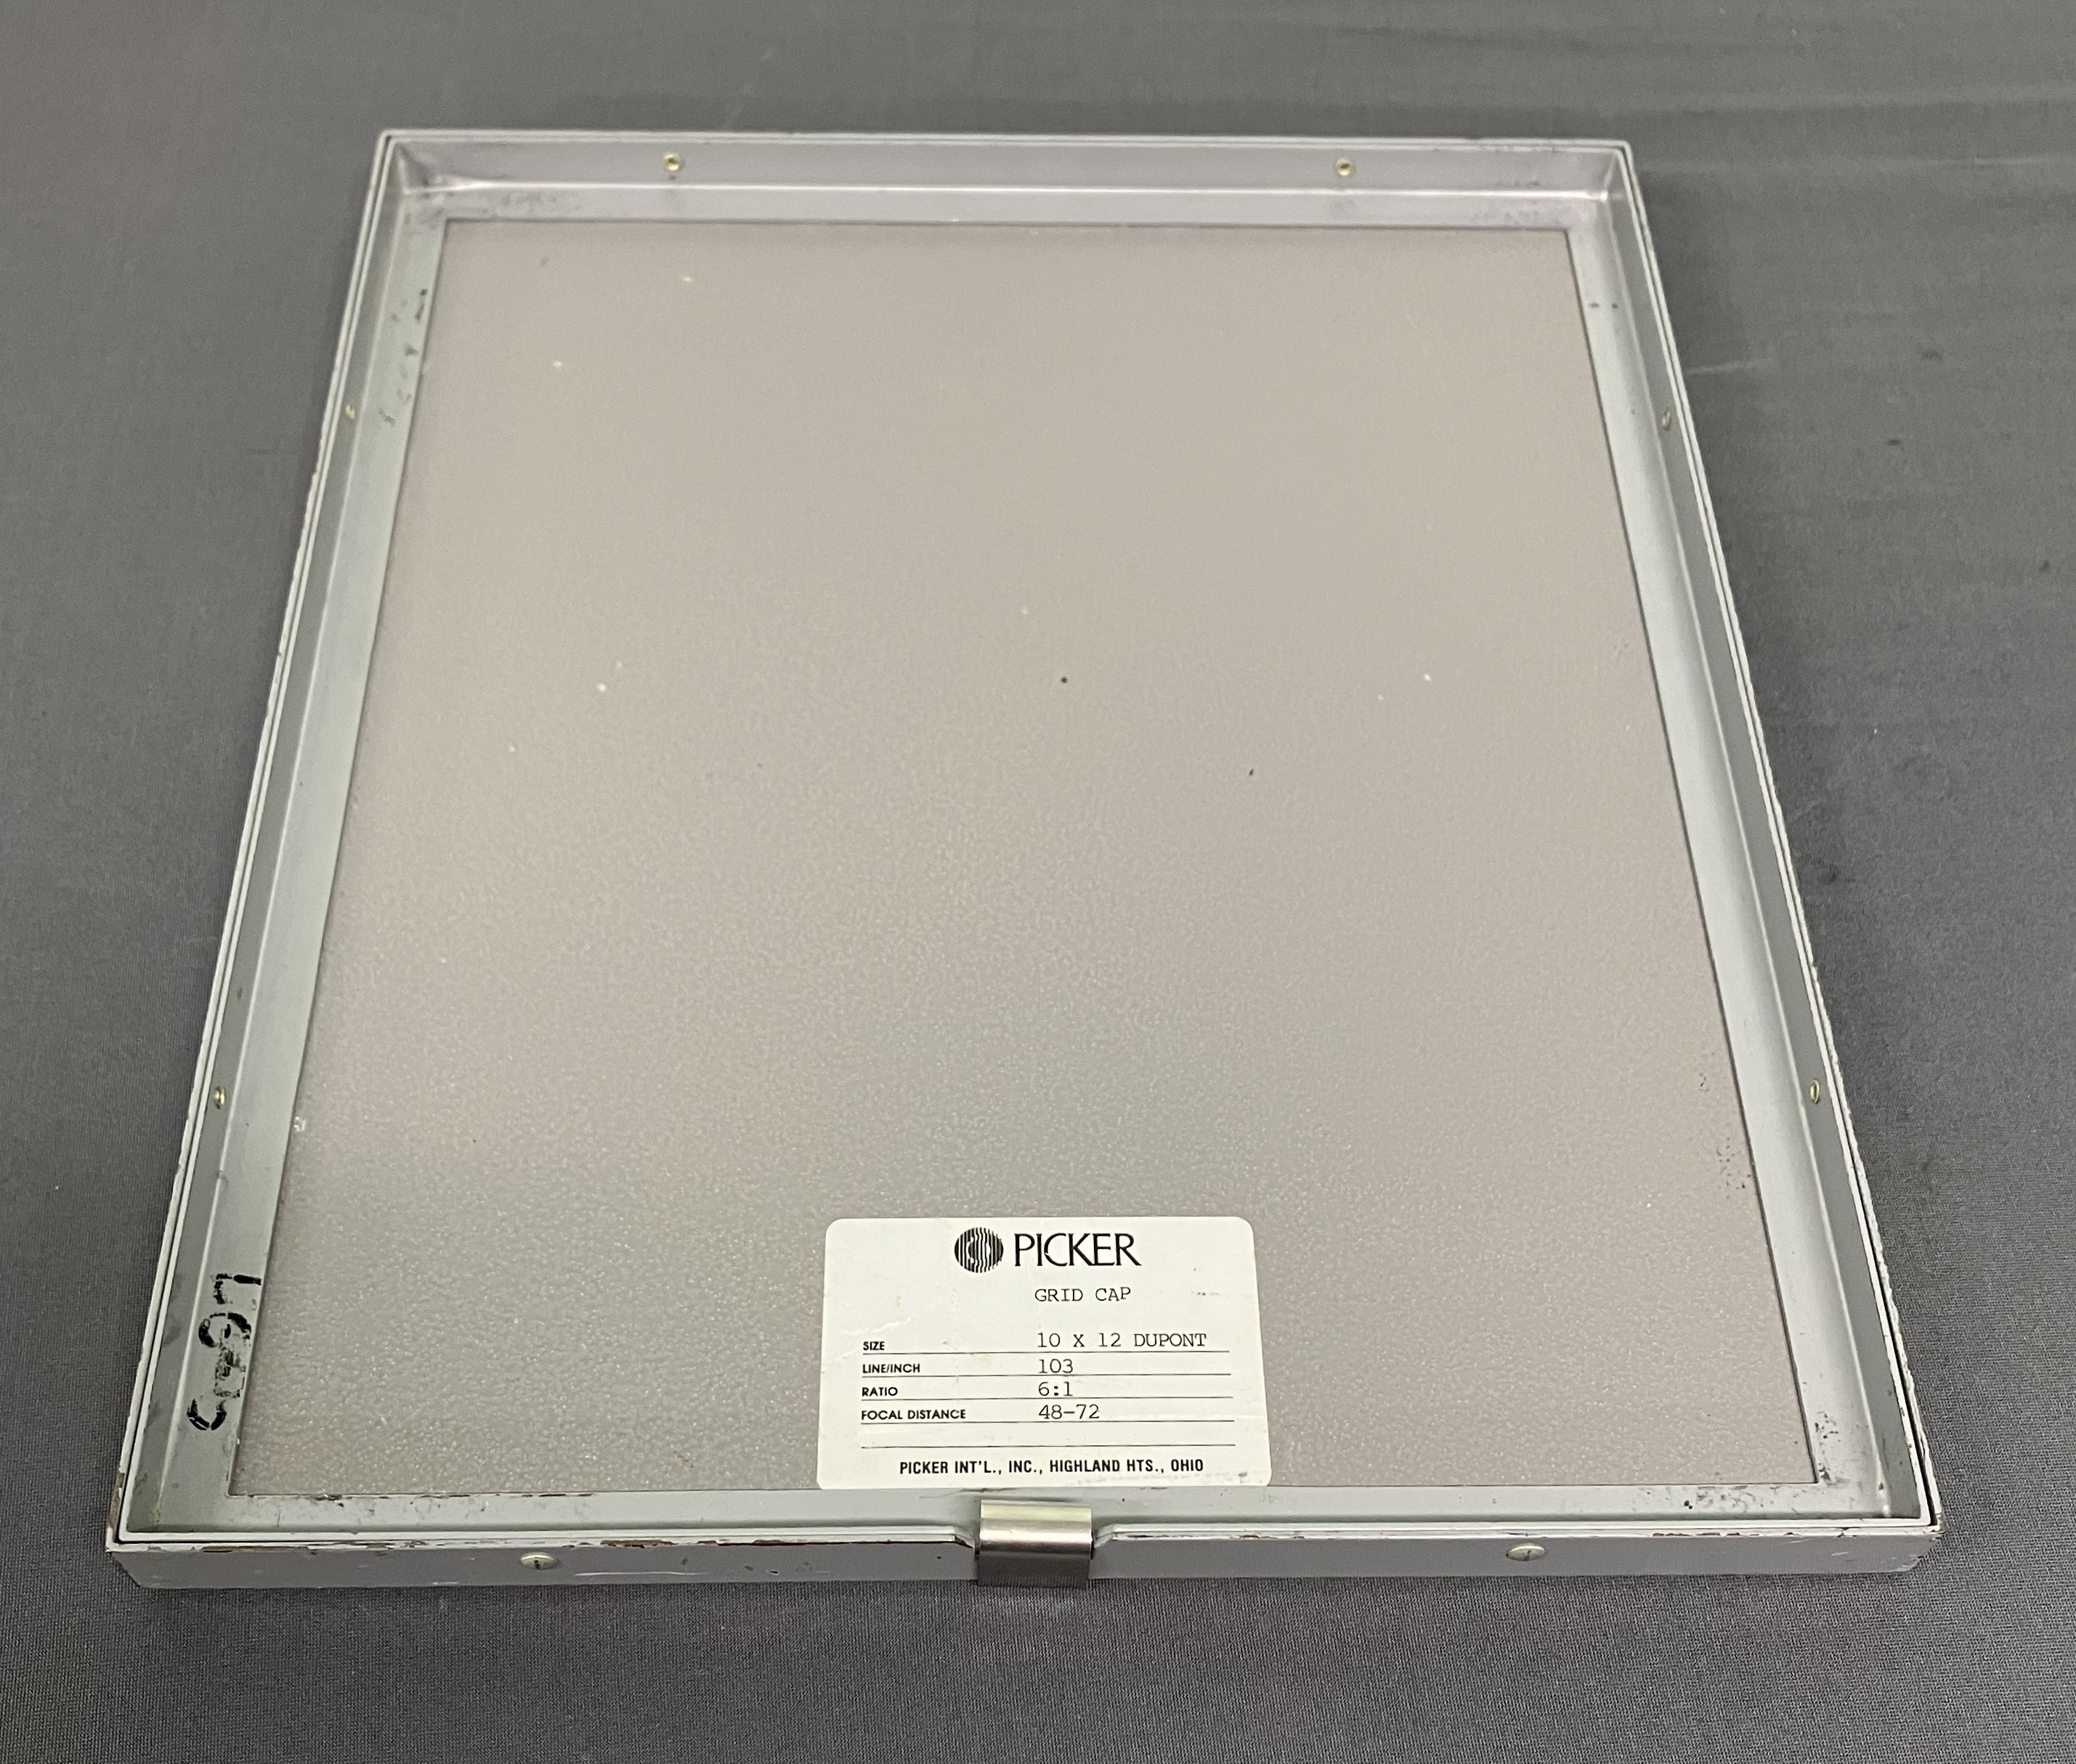 PICKER 10x12 Dupont X-Ray Grid Cap